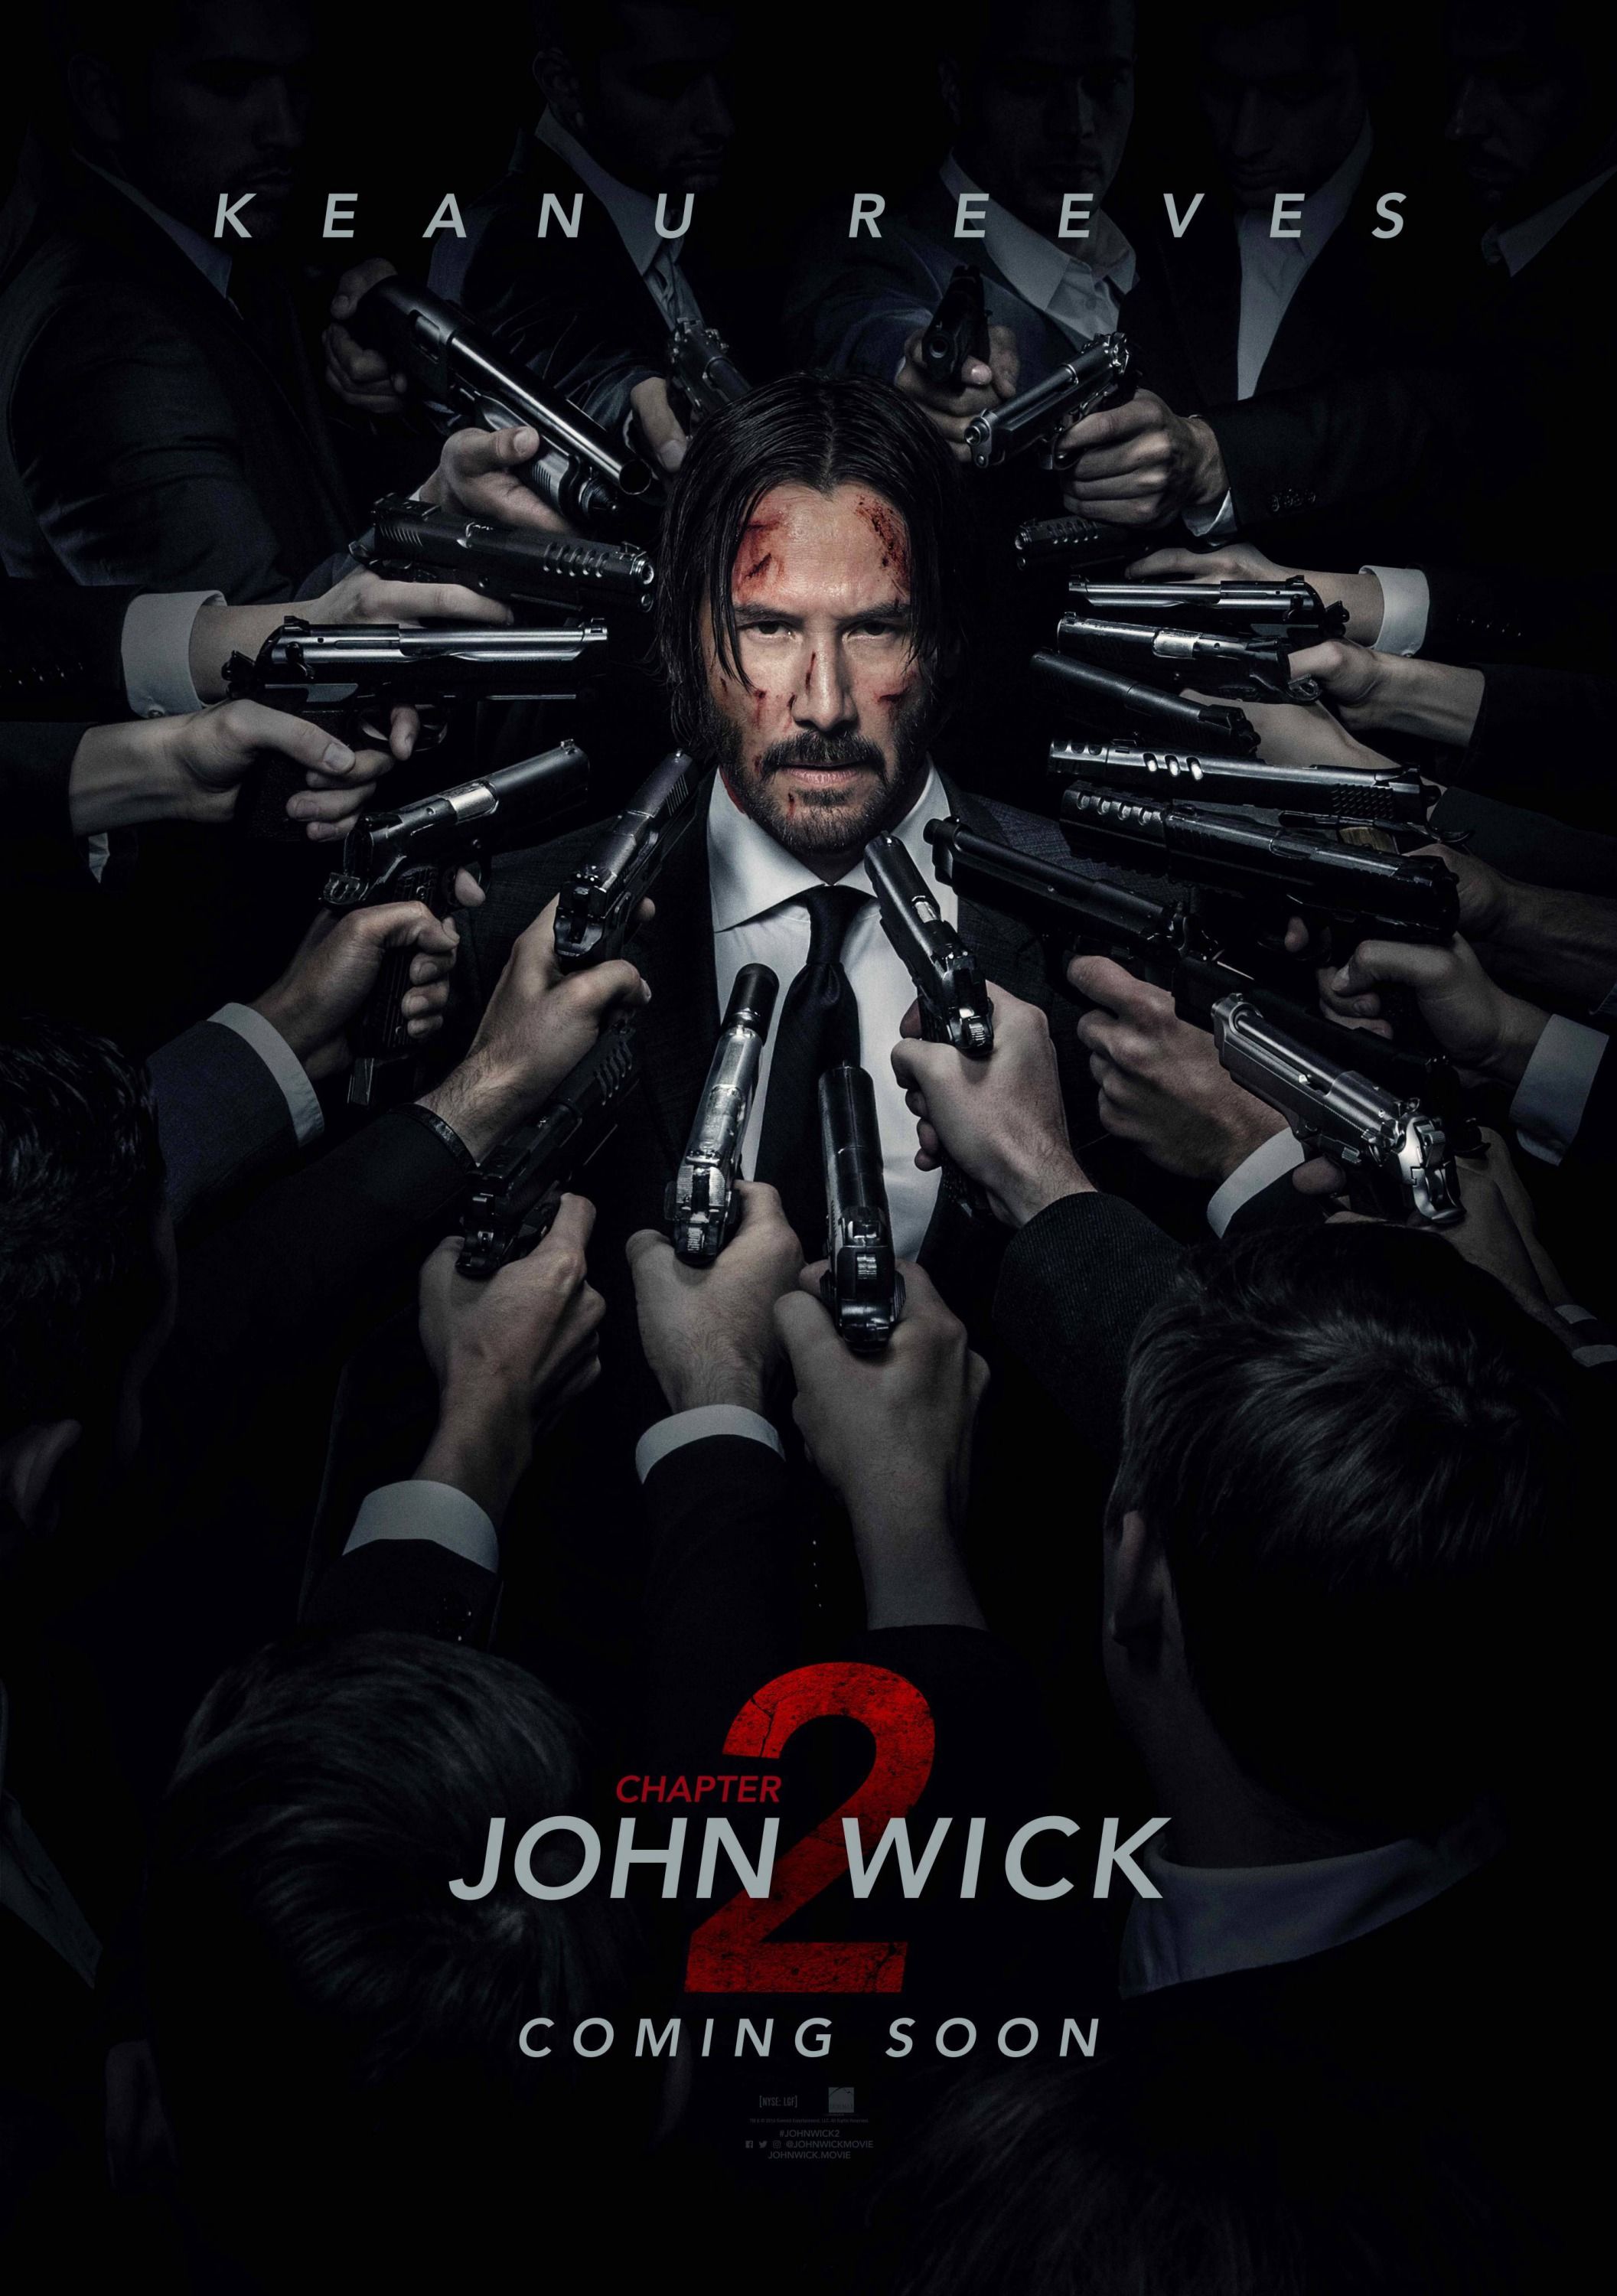 New John Wick poster